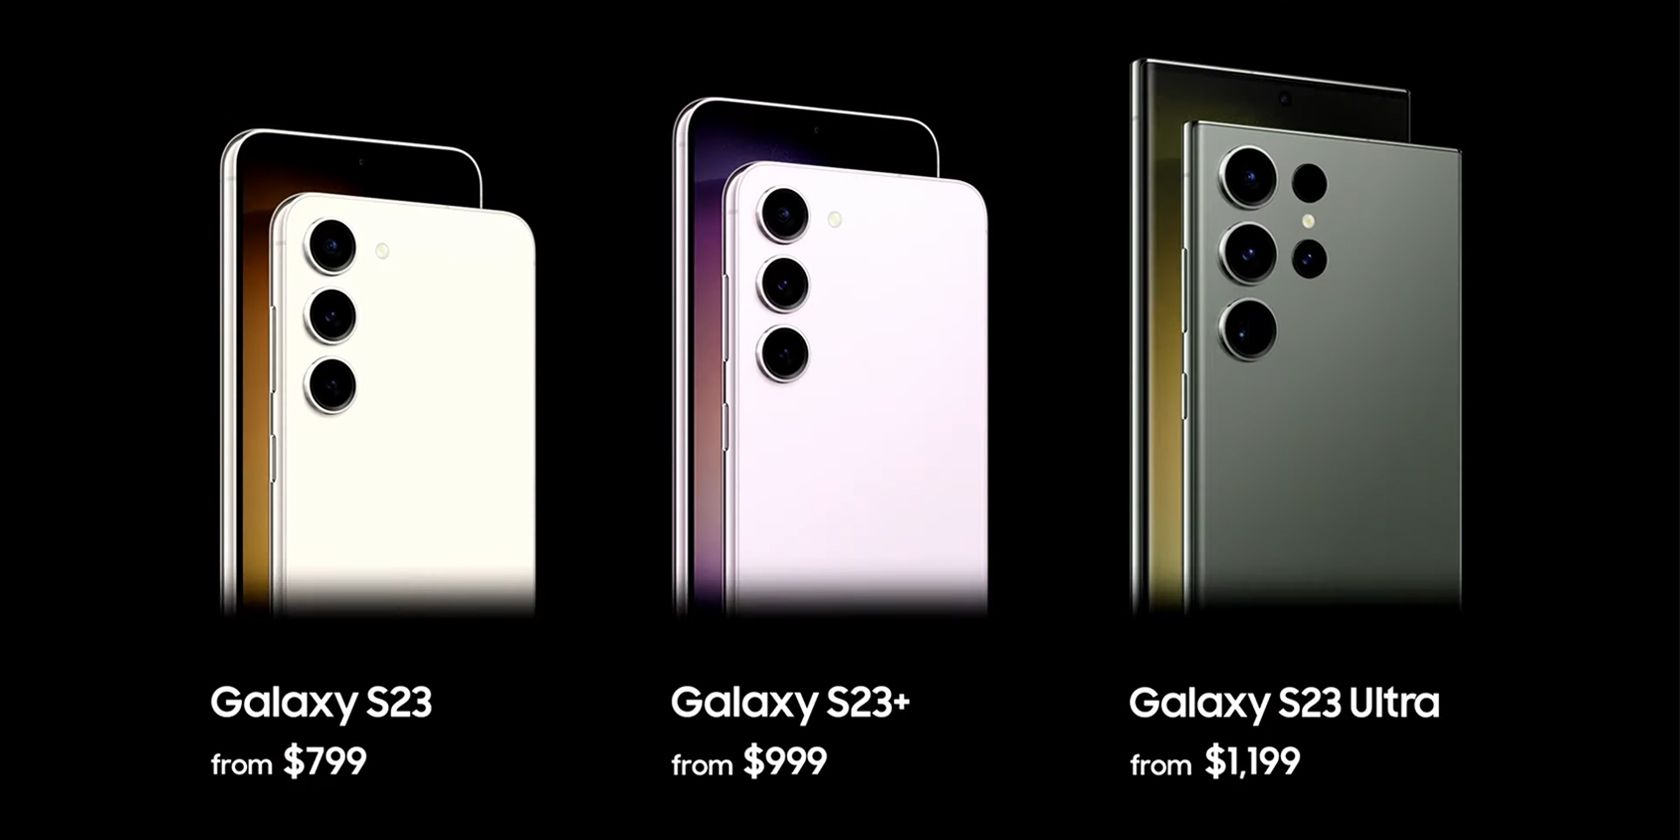 Samsung Galaxy S23 prices